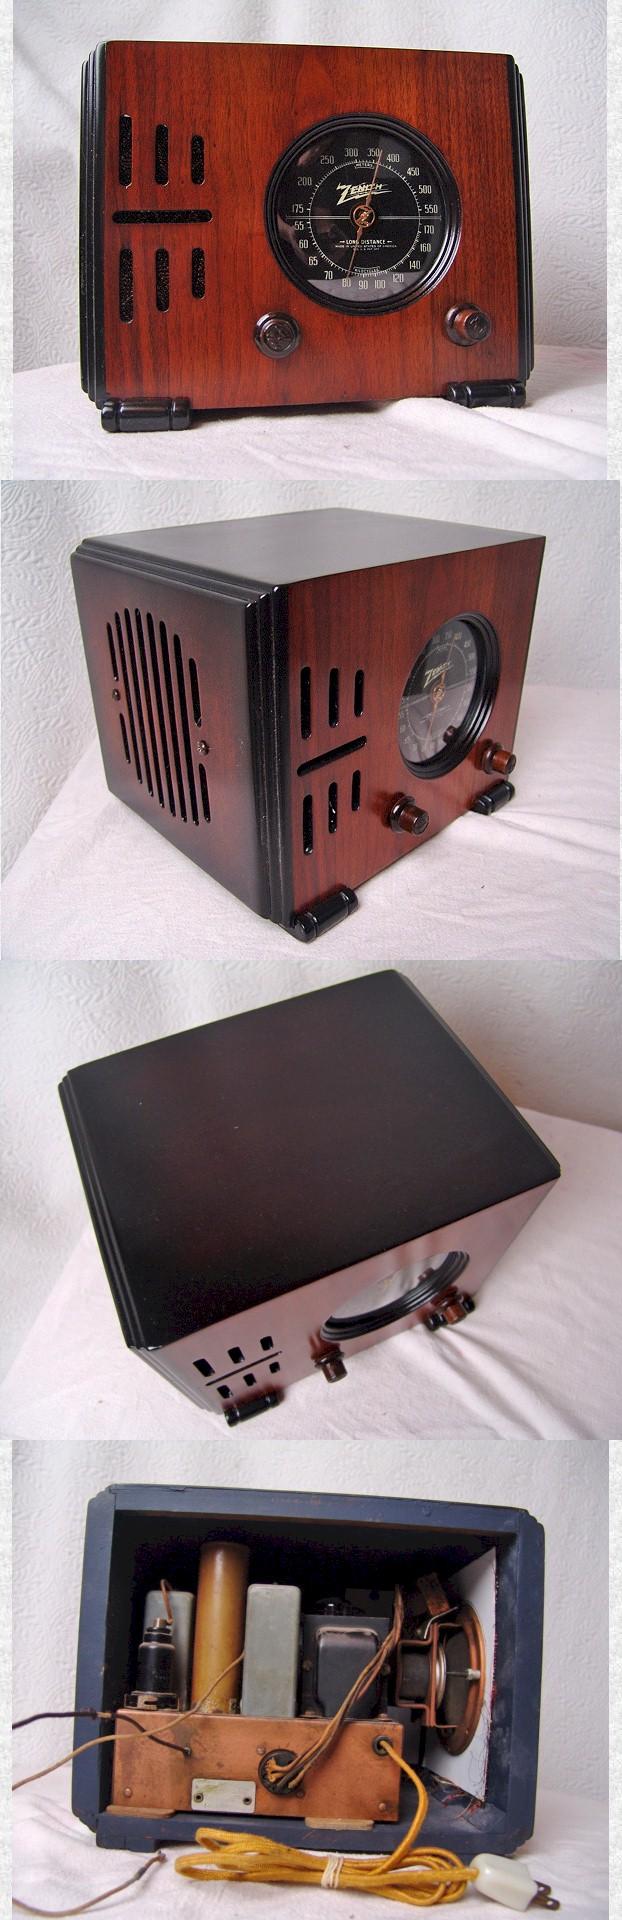 Zenith 5-R-216 "Cube" (1938)